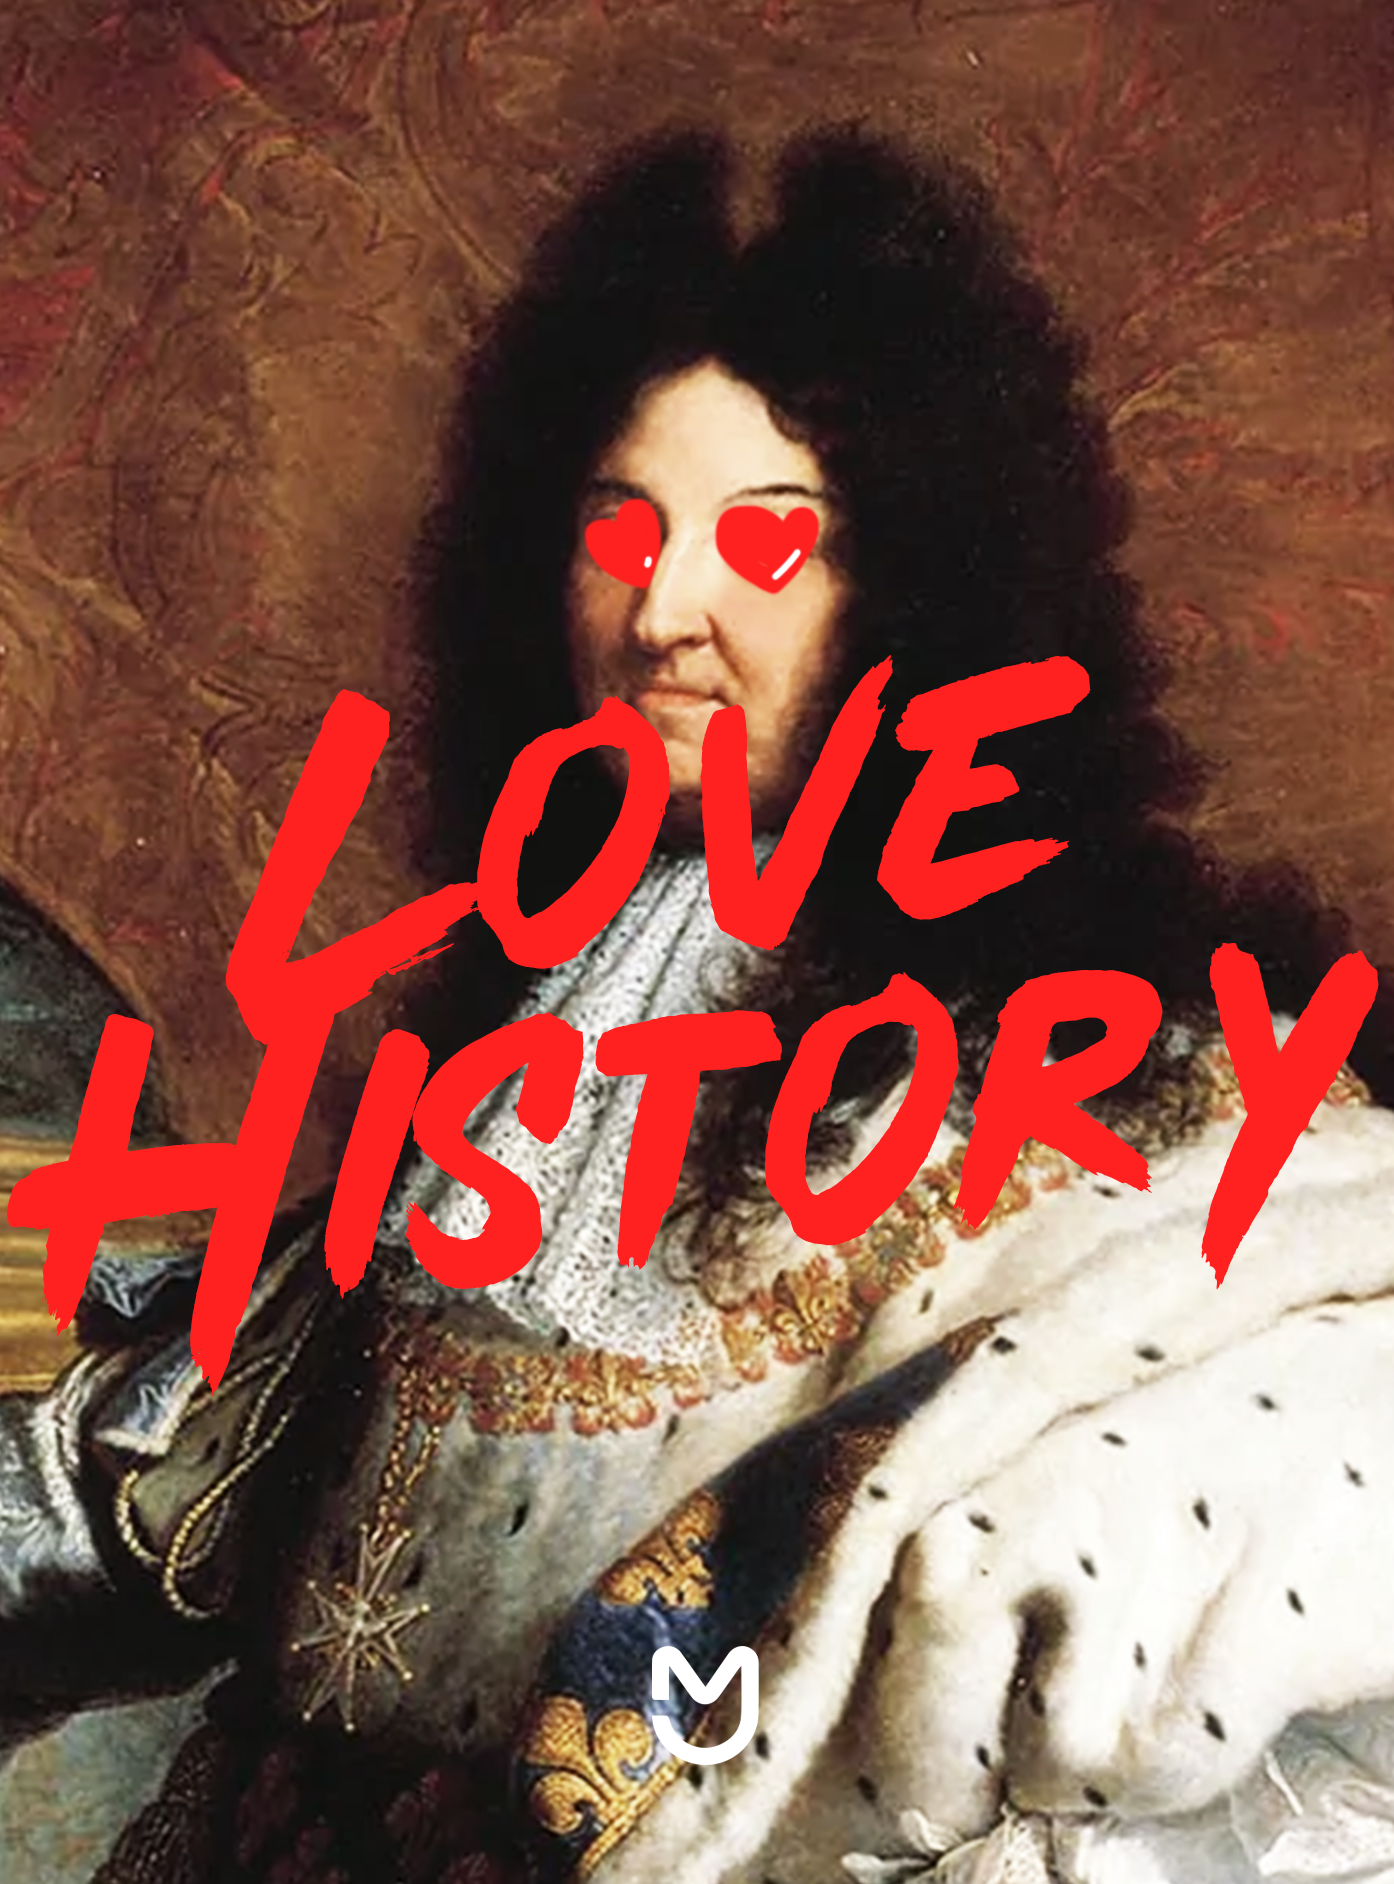 Love History